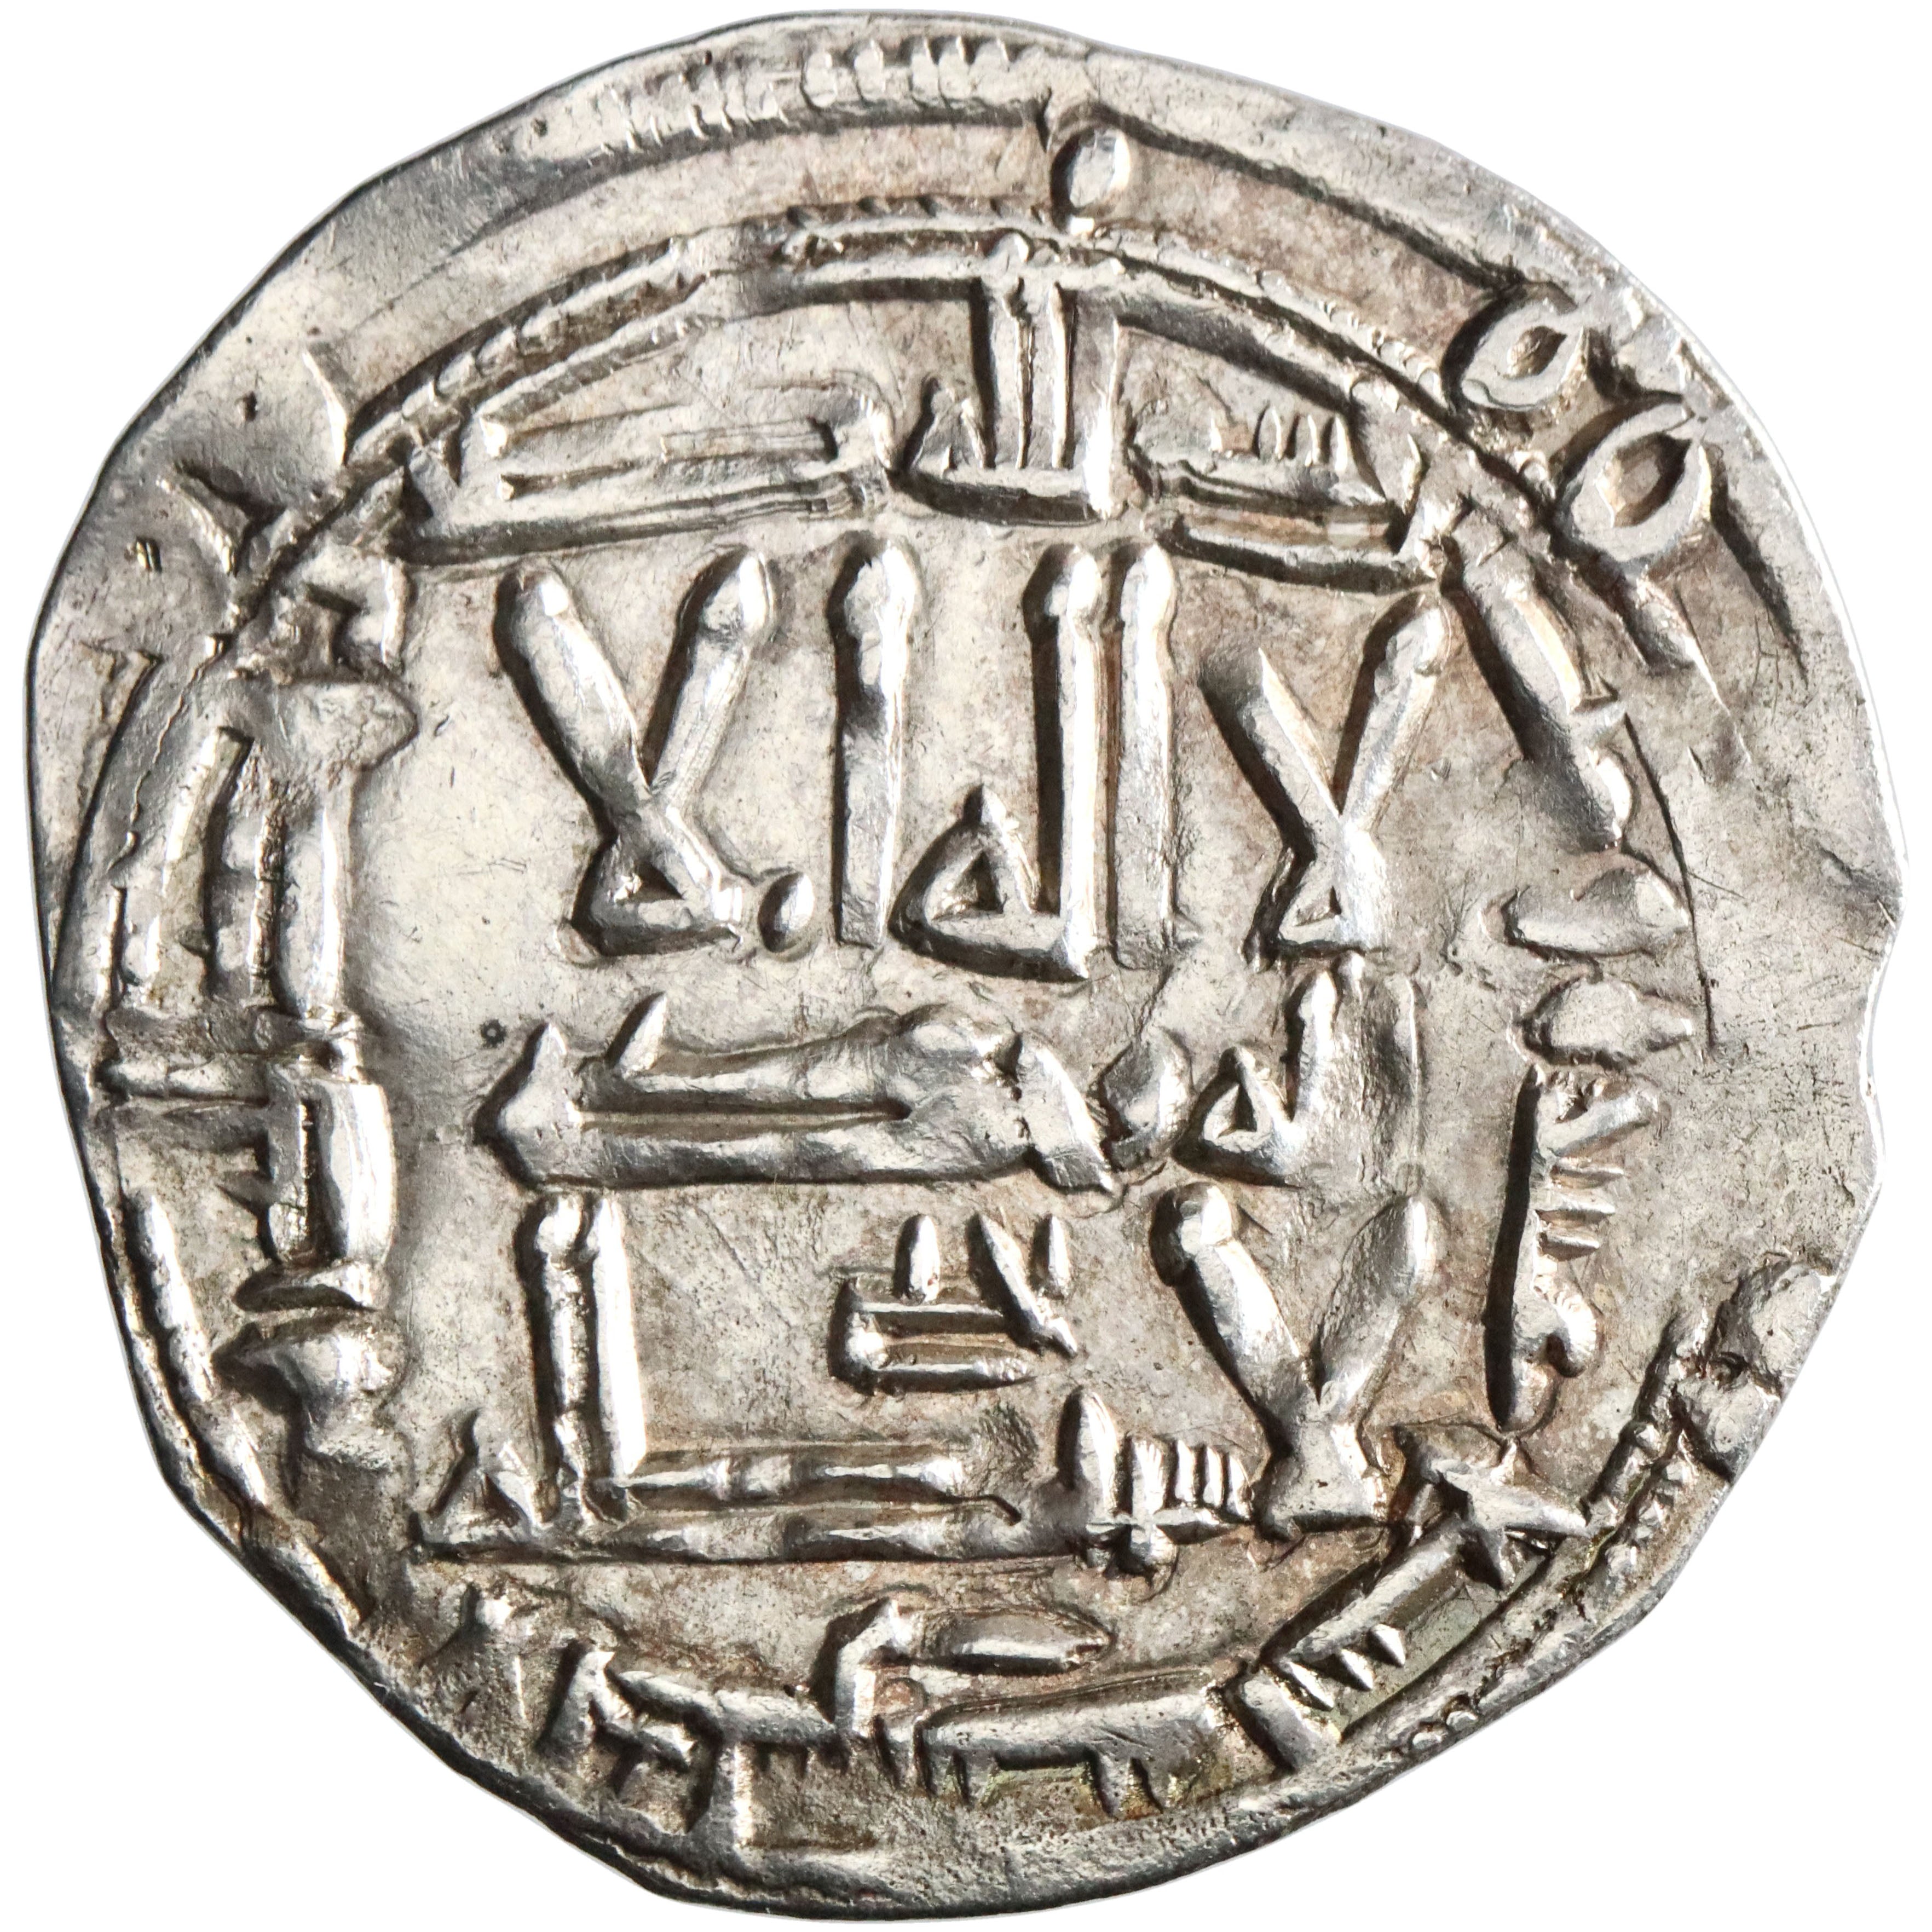 Umayyad of Spain, 'Abd al-Rahman II, silver dirham, al-Andalus (Spain) mint, AH 219, citing Yahya